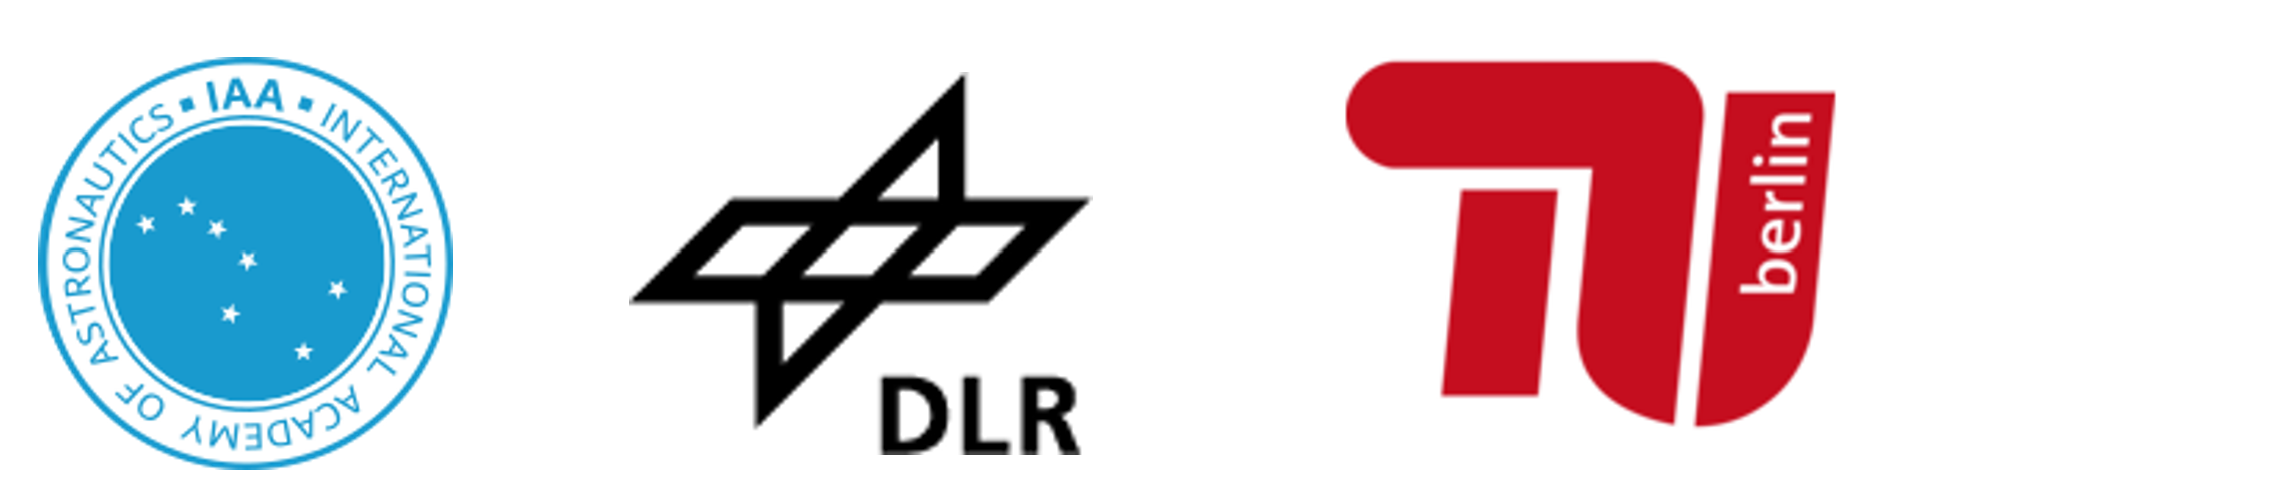 Logoband IAA DLR TU